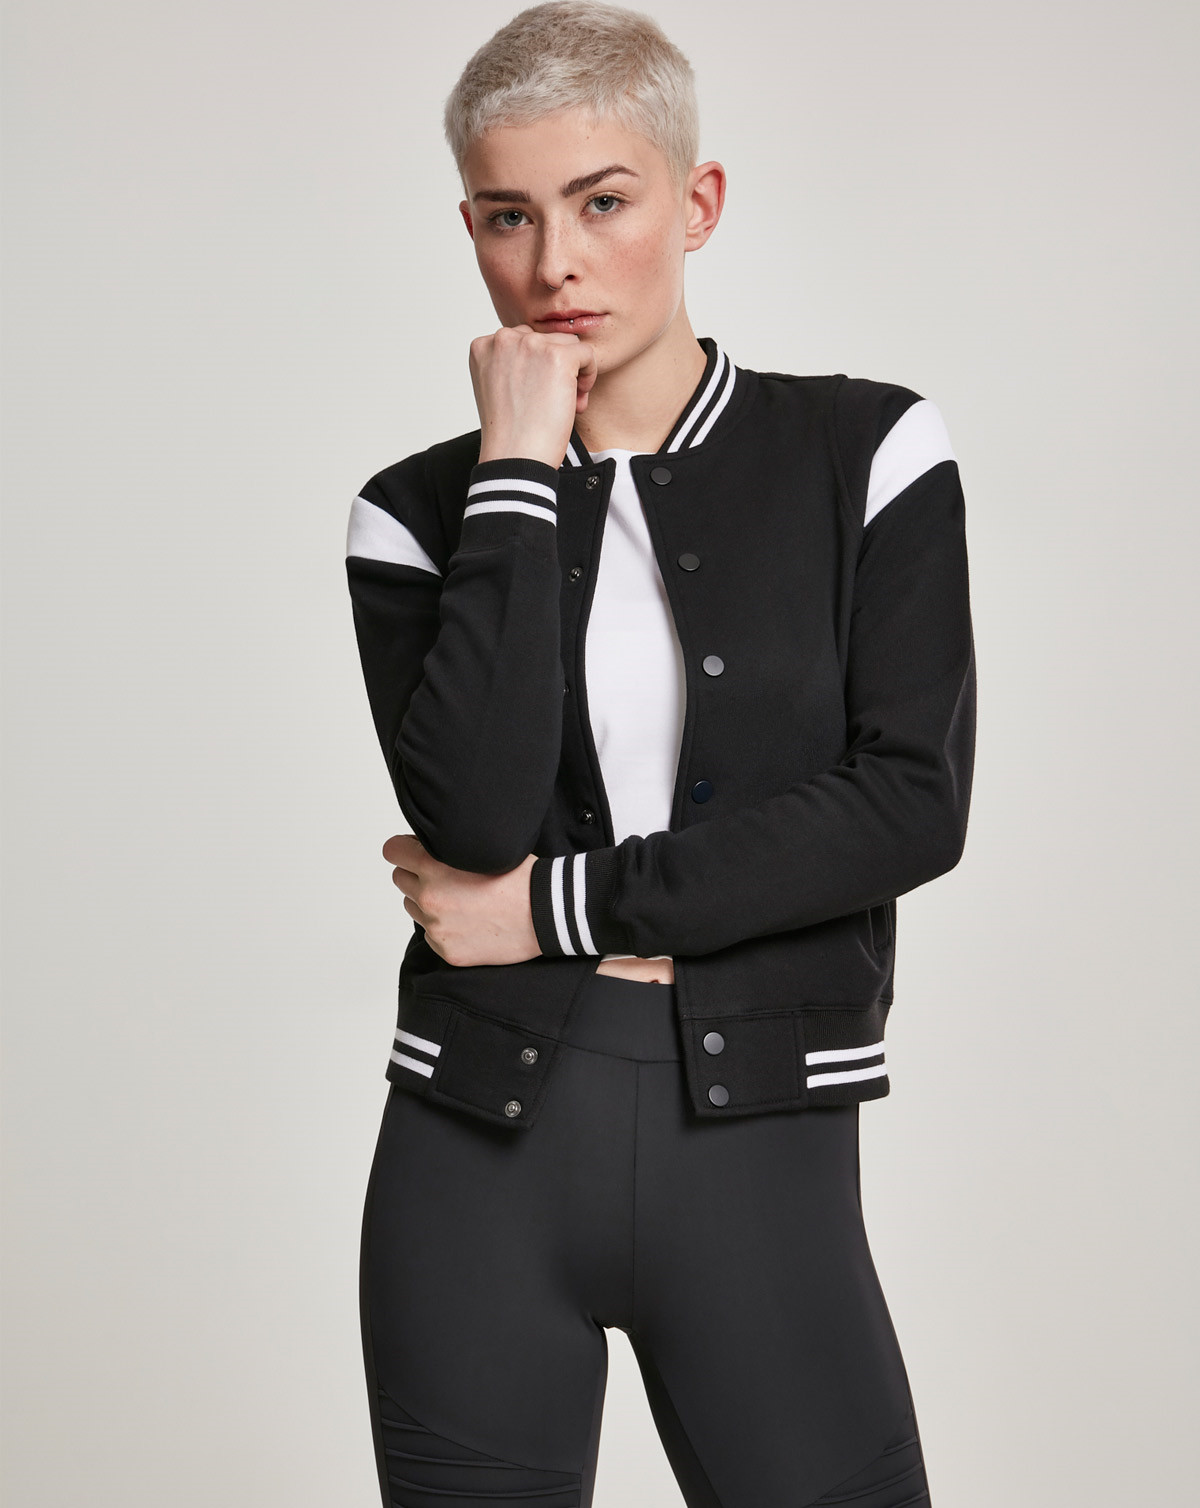 Urban Classics Ladies Inset College Sweat Jacket (Sort / Hvid, XL)